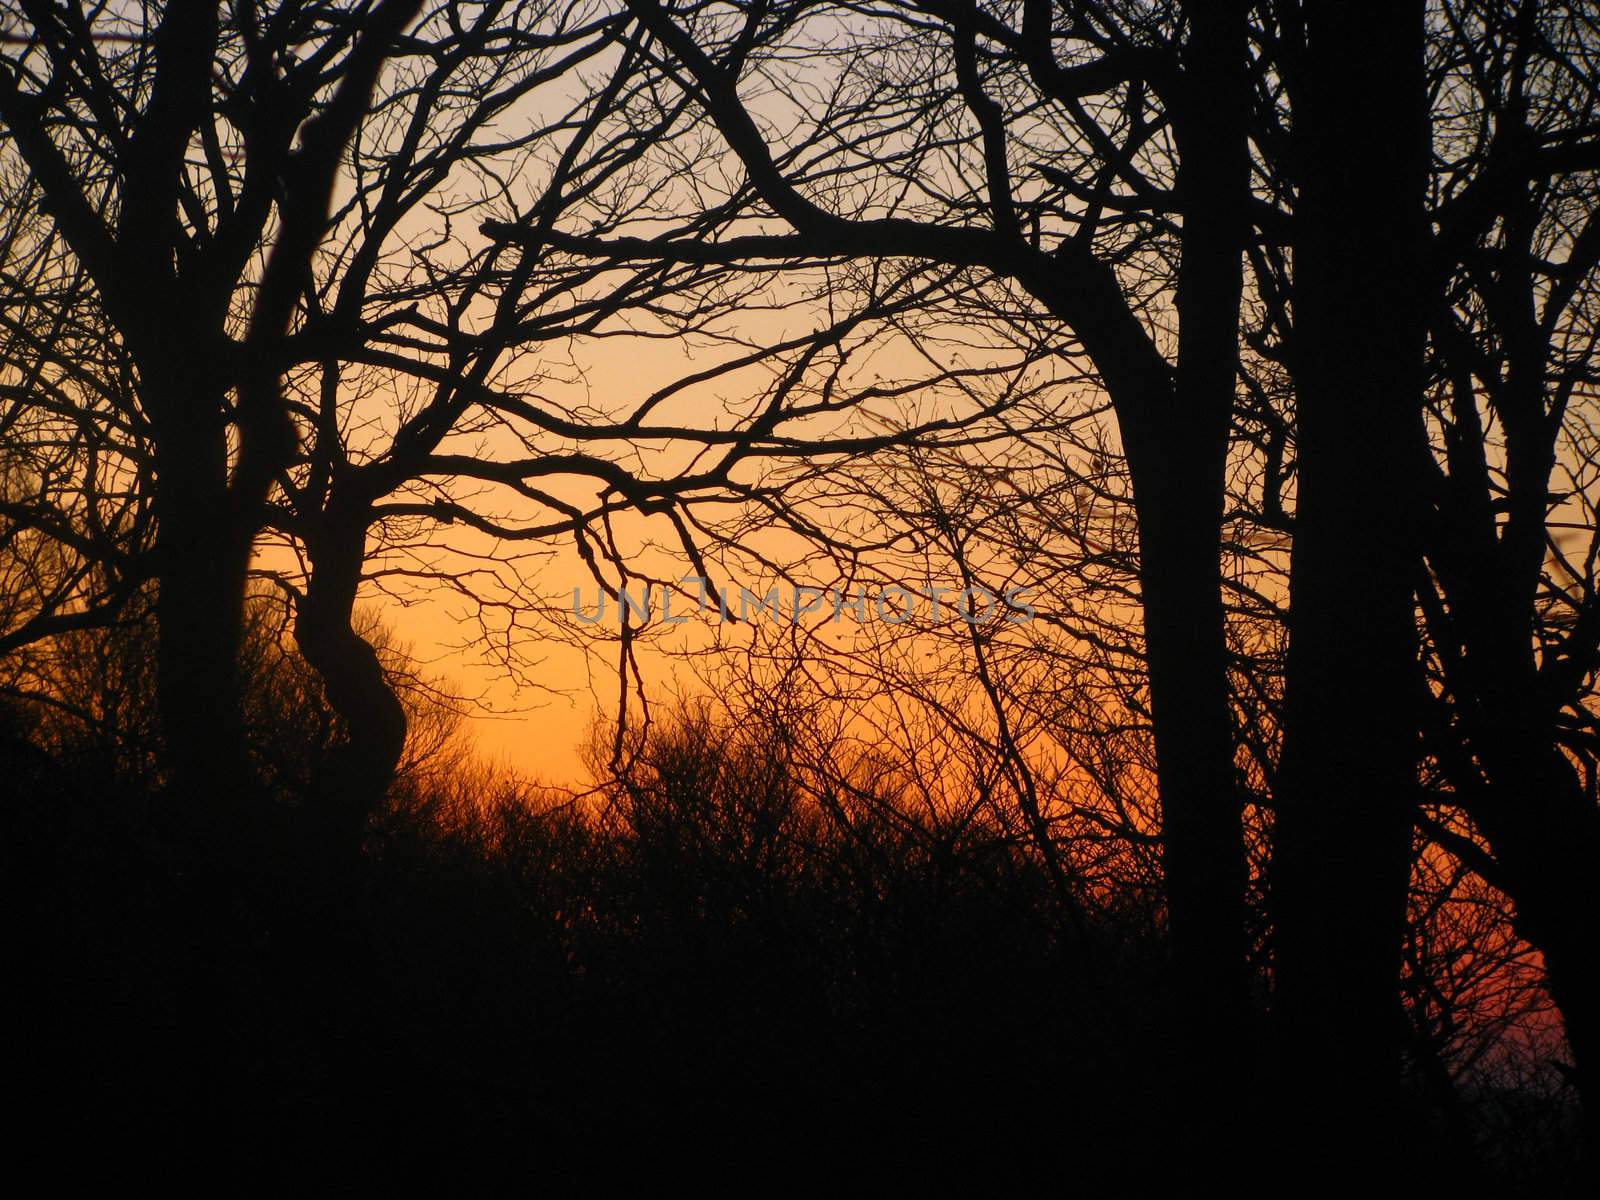 Sunset on the Appalachian Trail by jend